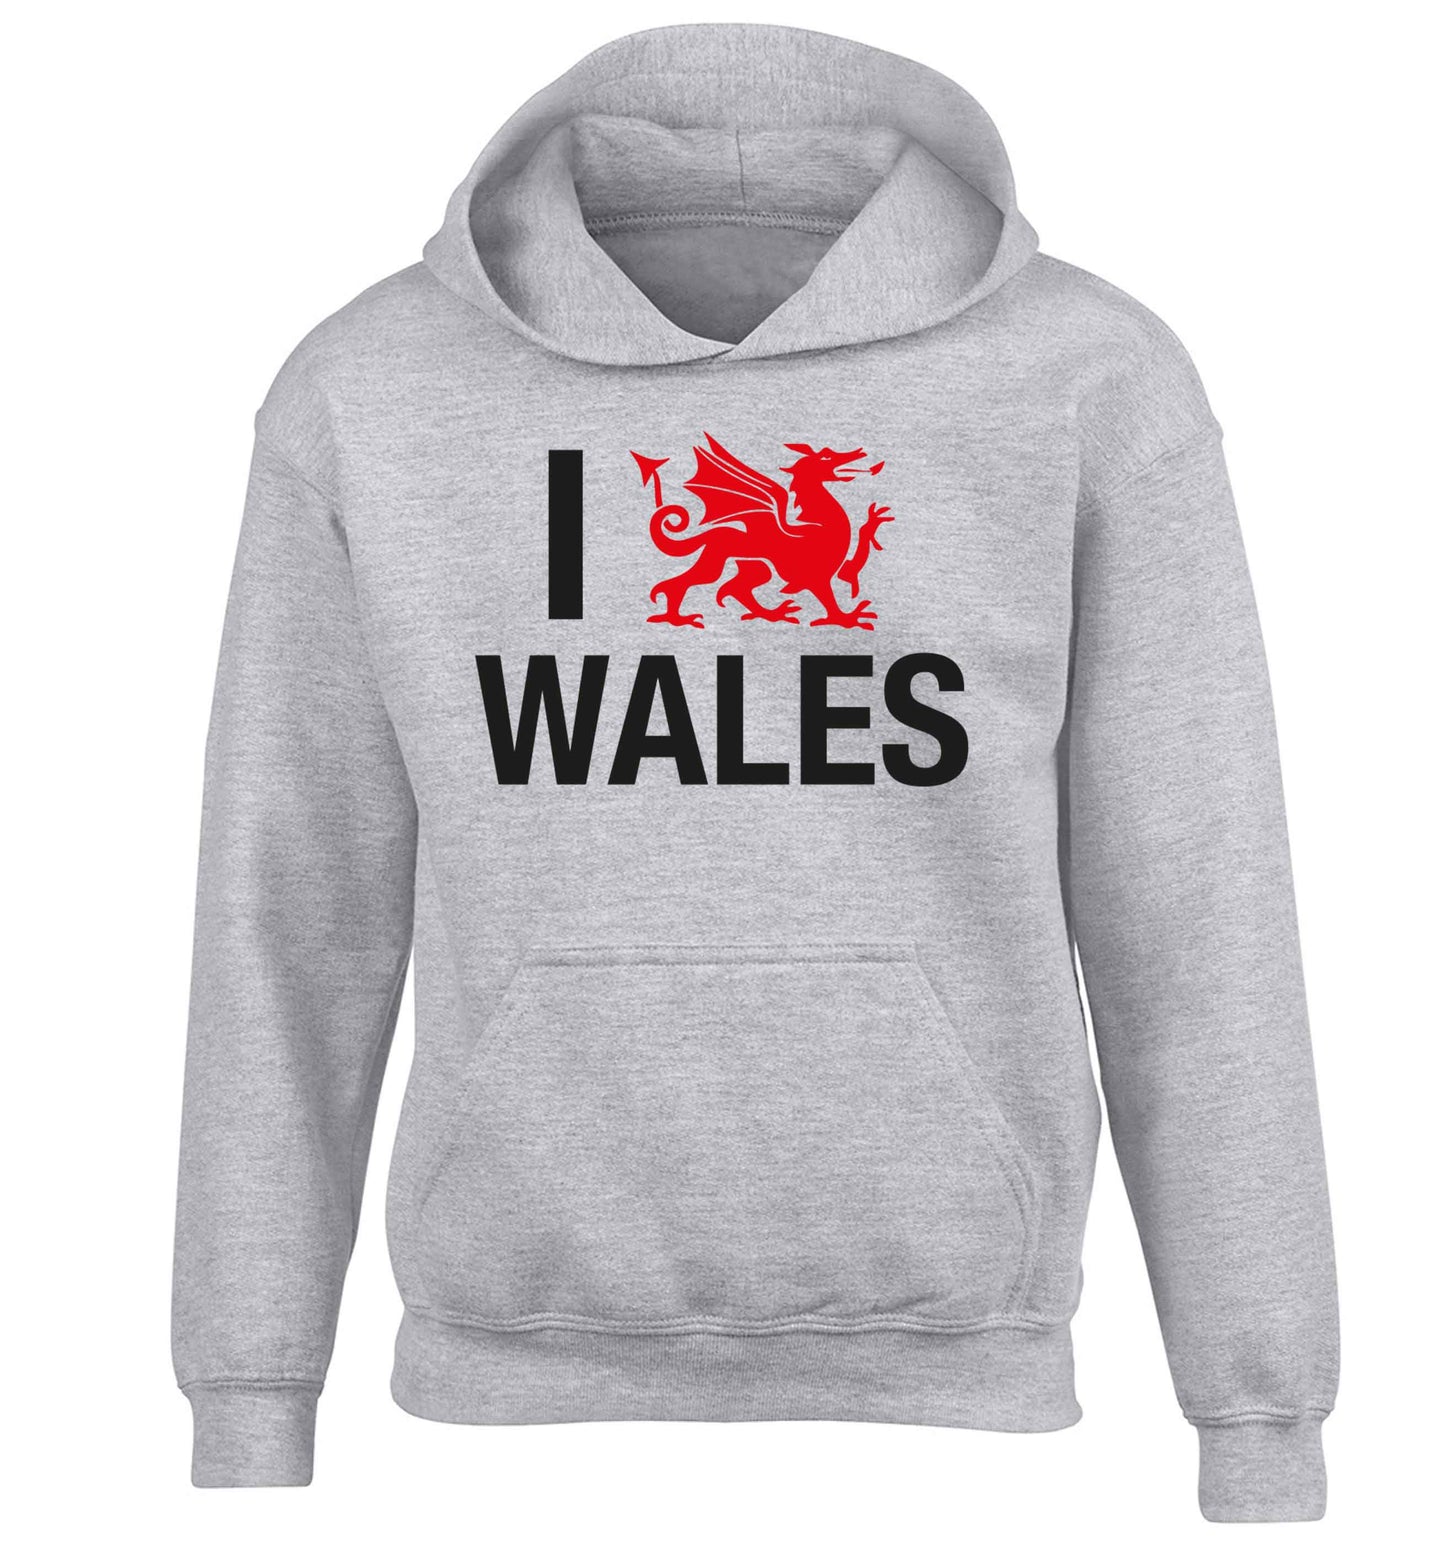 I love Wales children's grey hoodie 12-13 Years